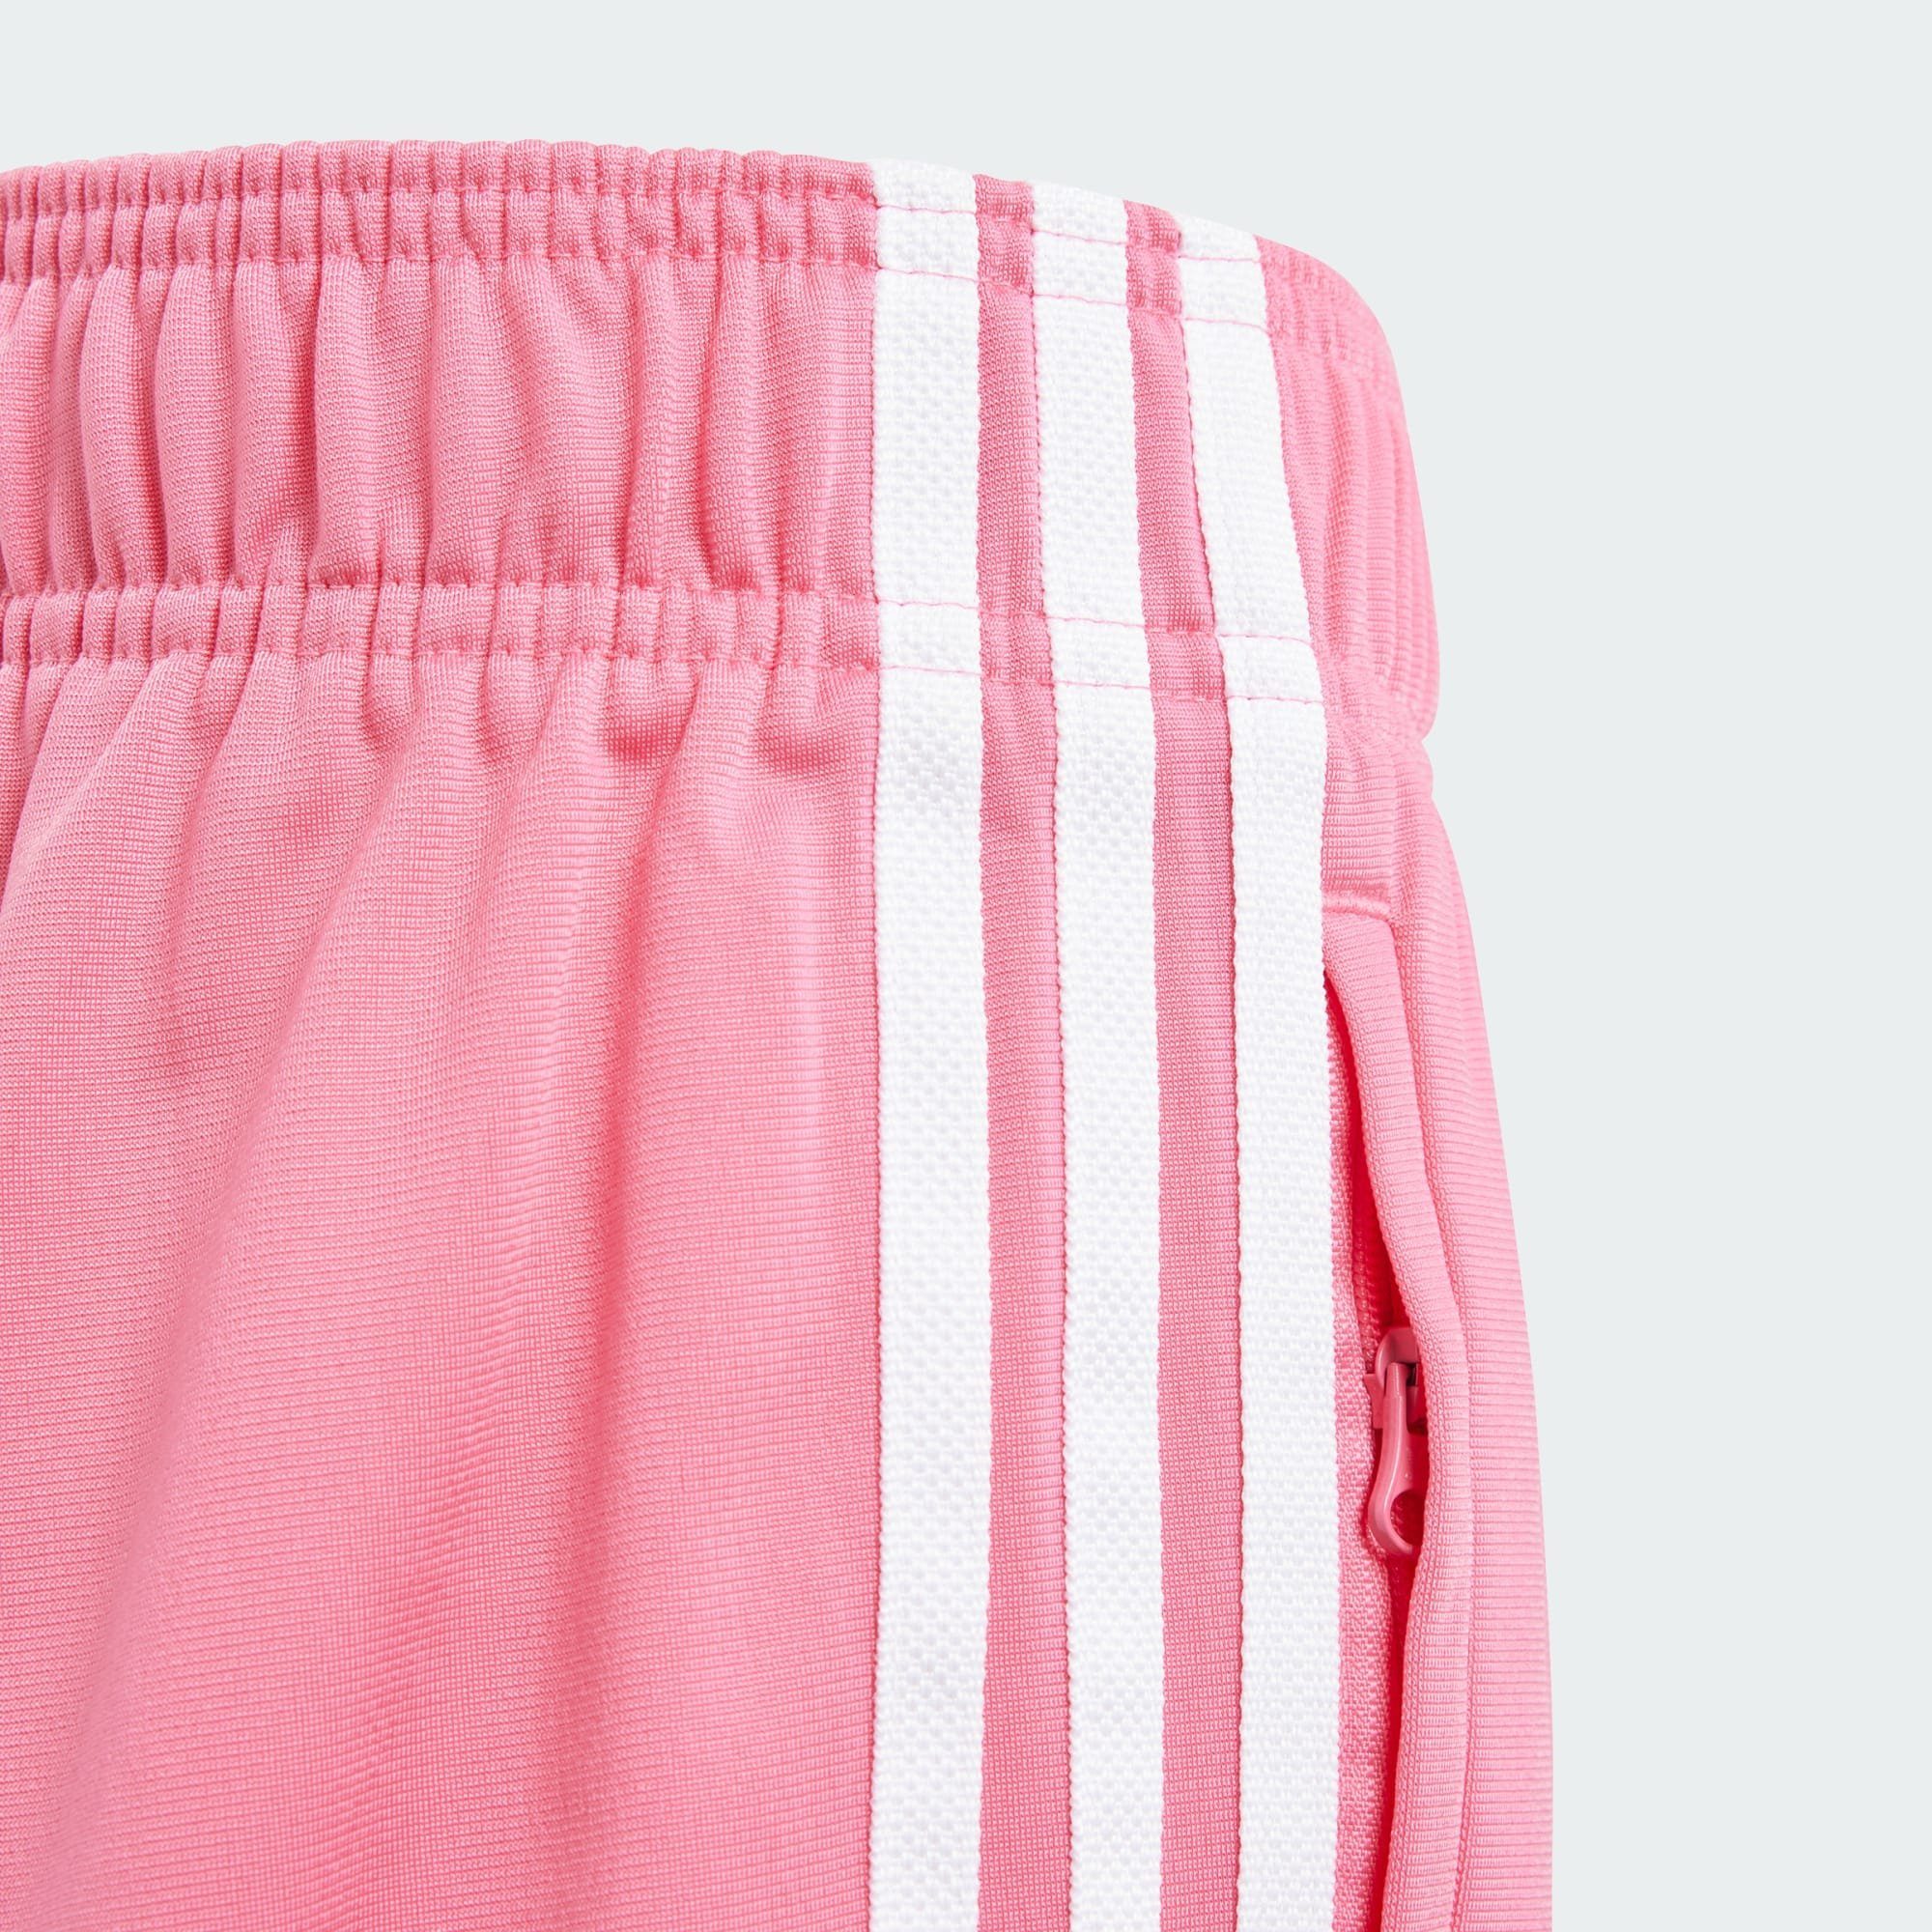 adidas Originals Leichtathletik-Hose ADICOLOR SST TRAININGSHOSE Pink Fusion